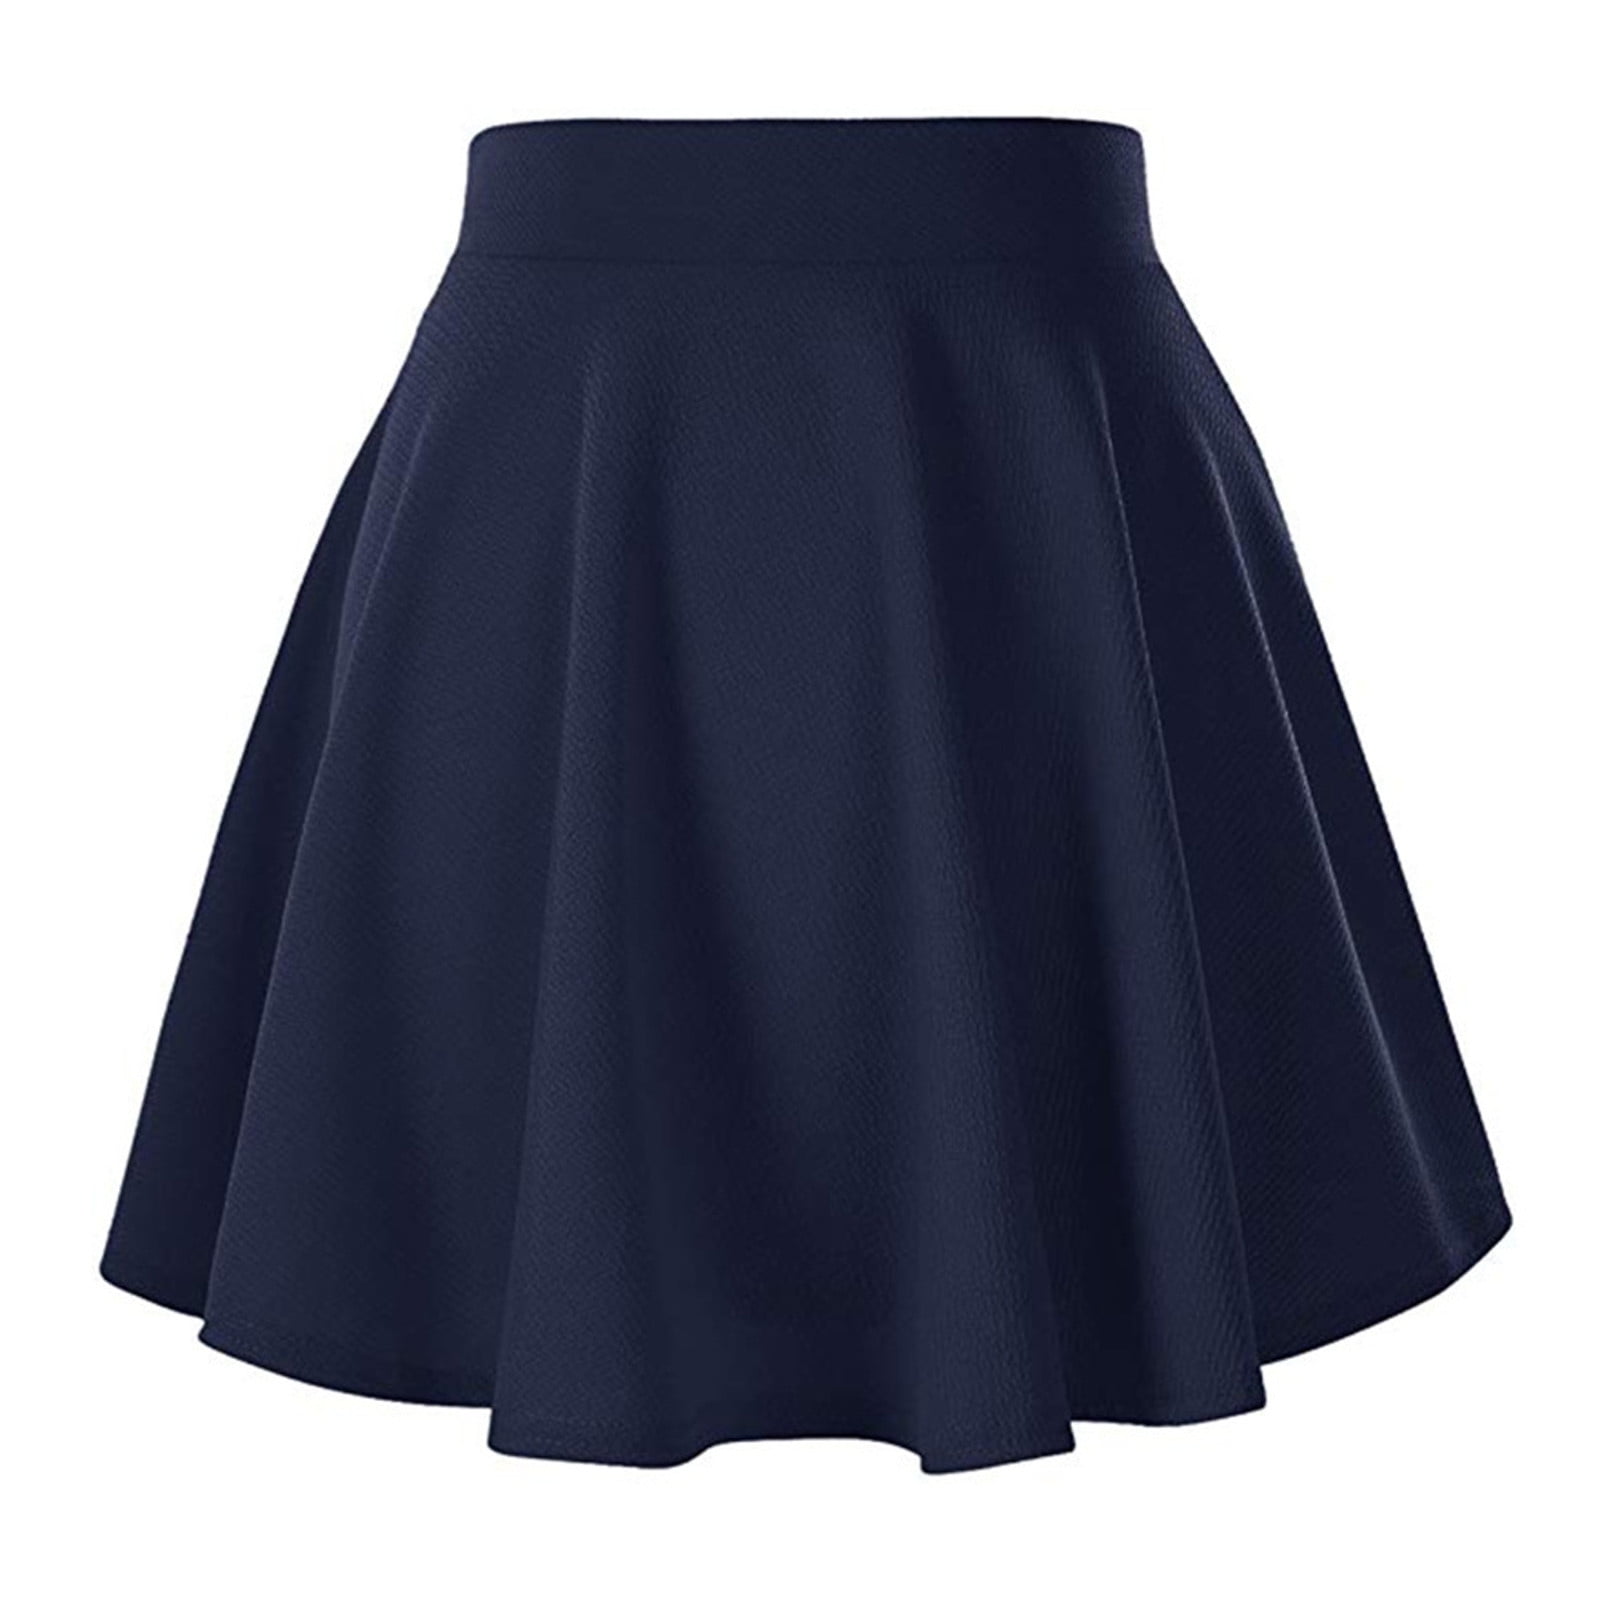 MRULIC skirts for women Women's Mini Flared Skirt Casual Pleats Versatile  Solid Color Stretchy Skirt Navy Blue + M